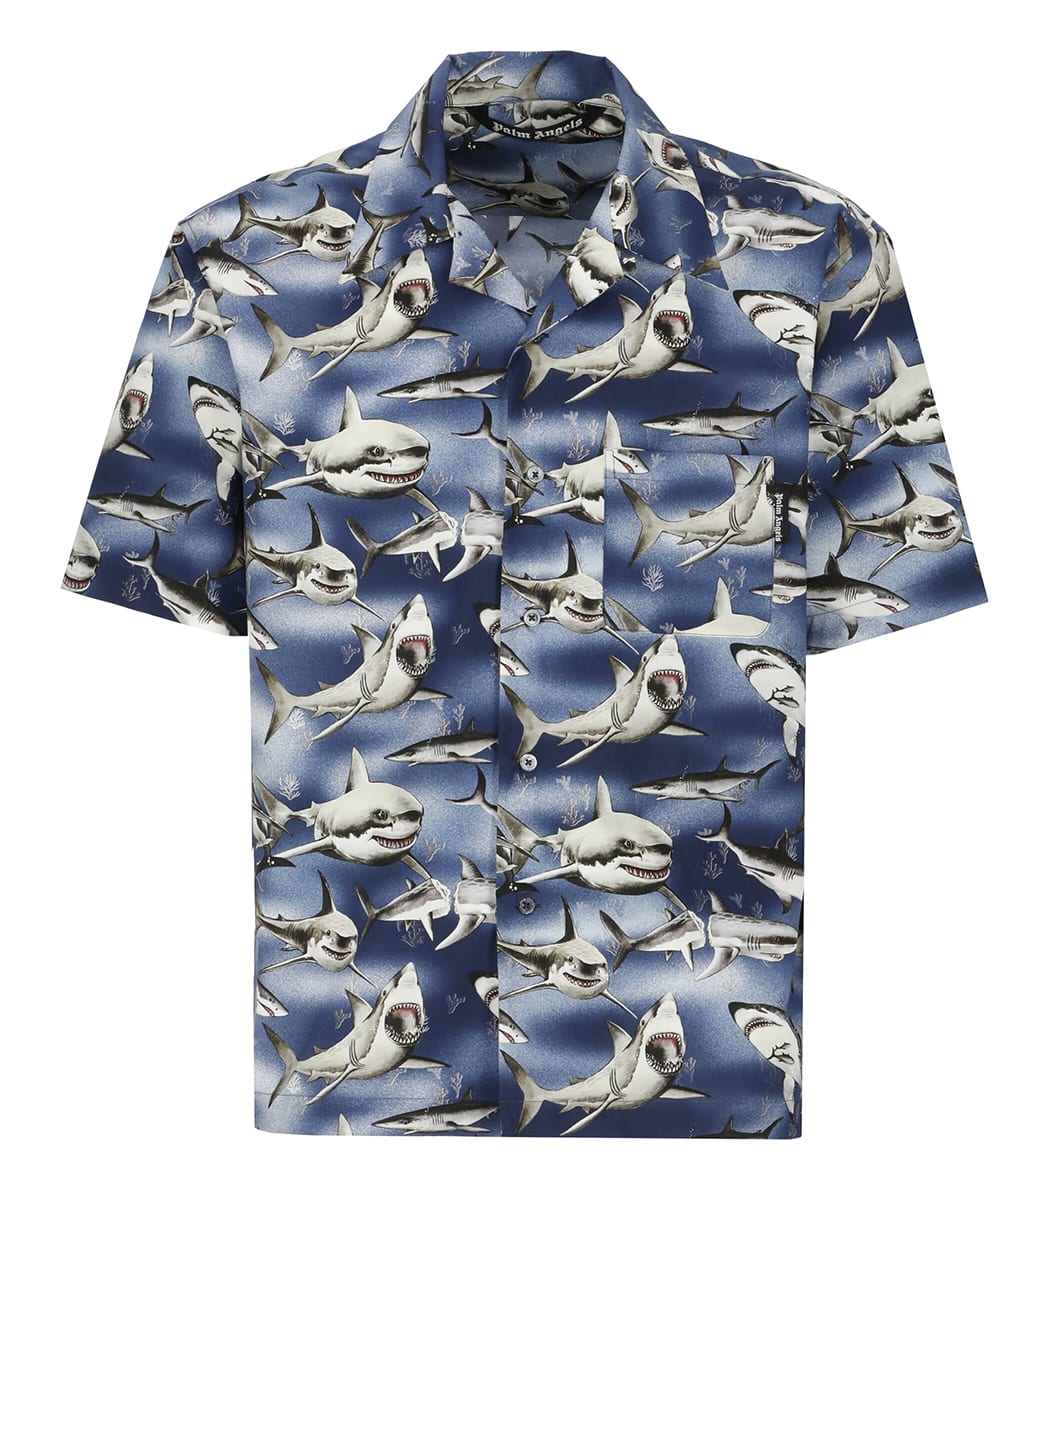 Palm Angels Shark Bowling Shirt